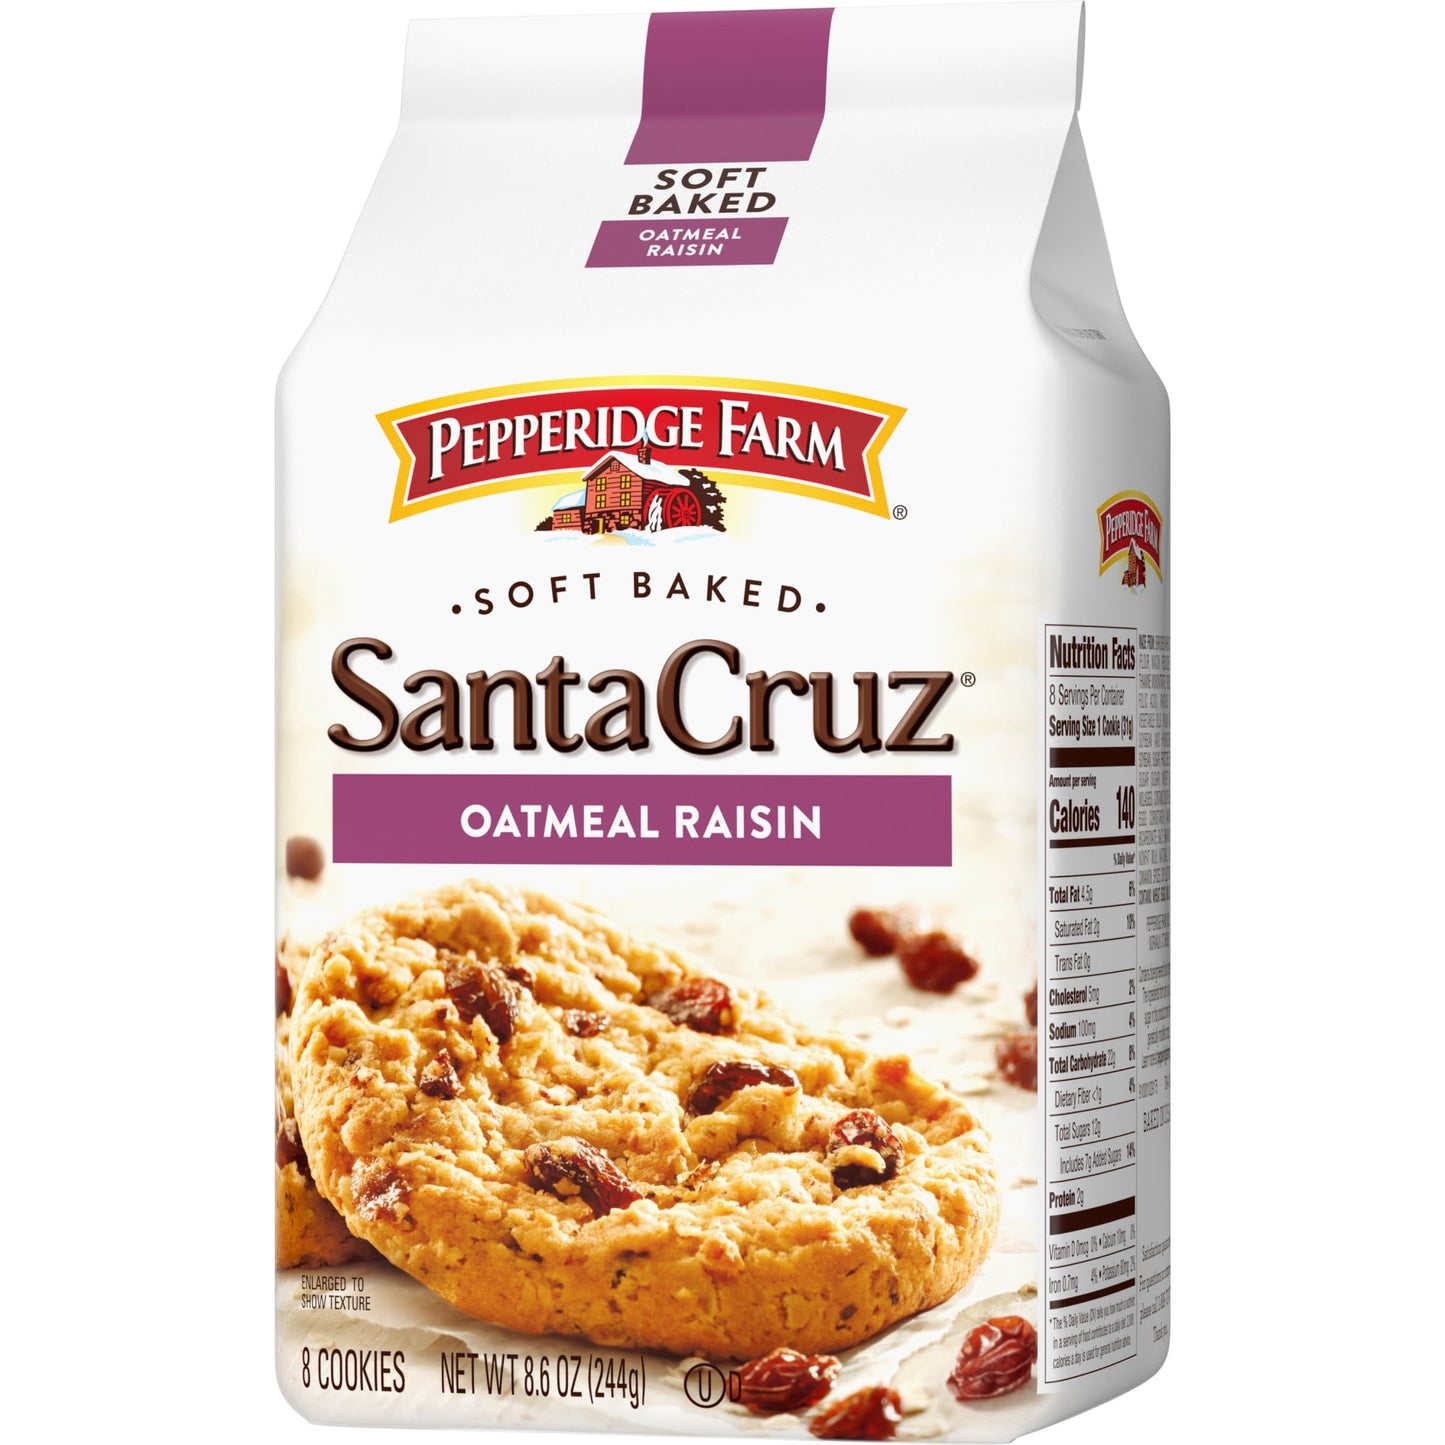 Pepperidge Farm Santa Cruz Soft Baked Oatmeal Raisin Cookies, 8.6 oz Bag (8 Cookies)